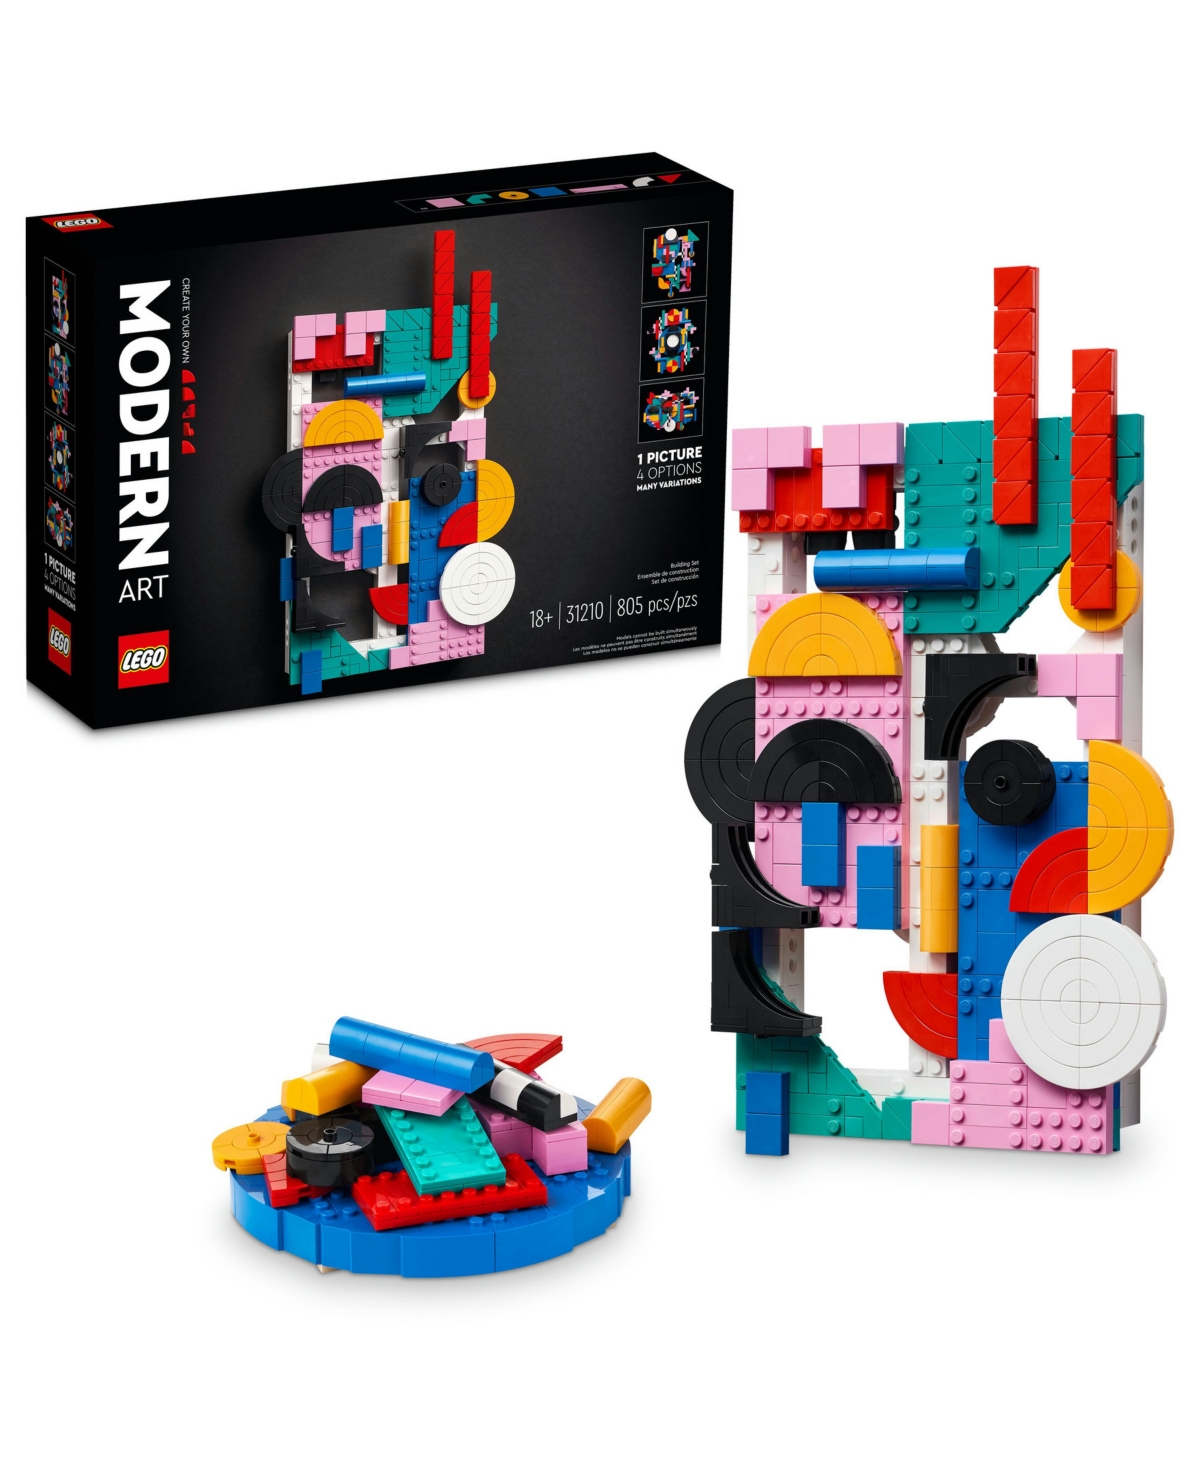 Lego Art 31210 Modern Art Toy Building Set In Multicolor